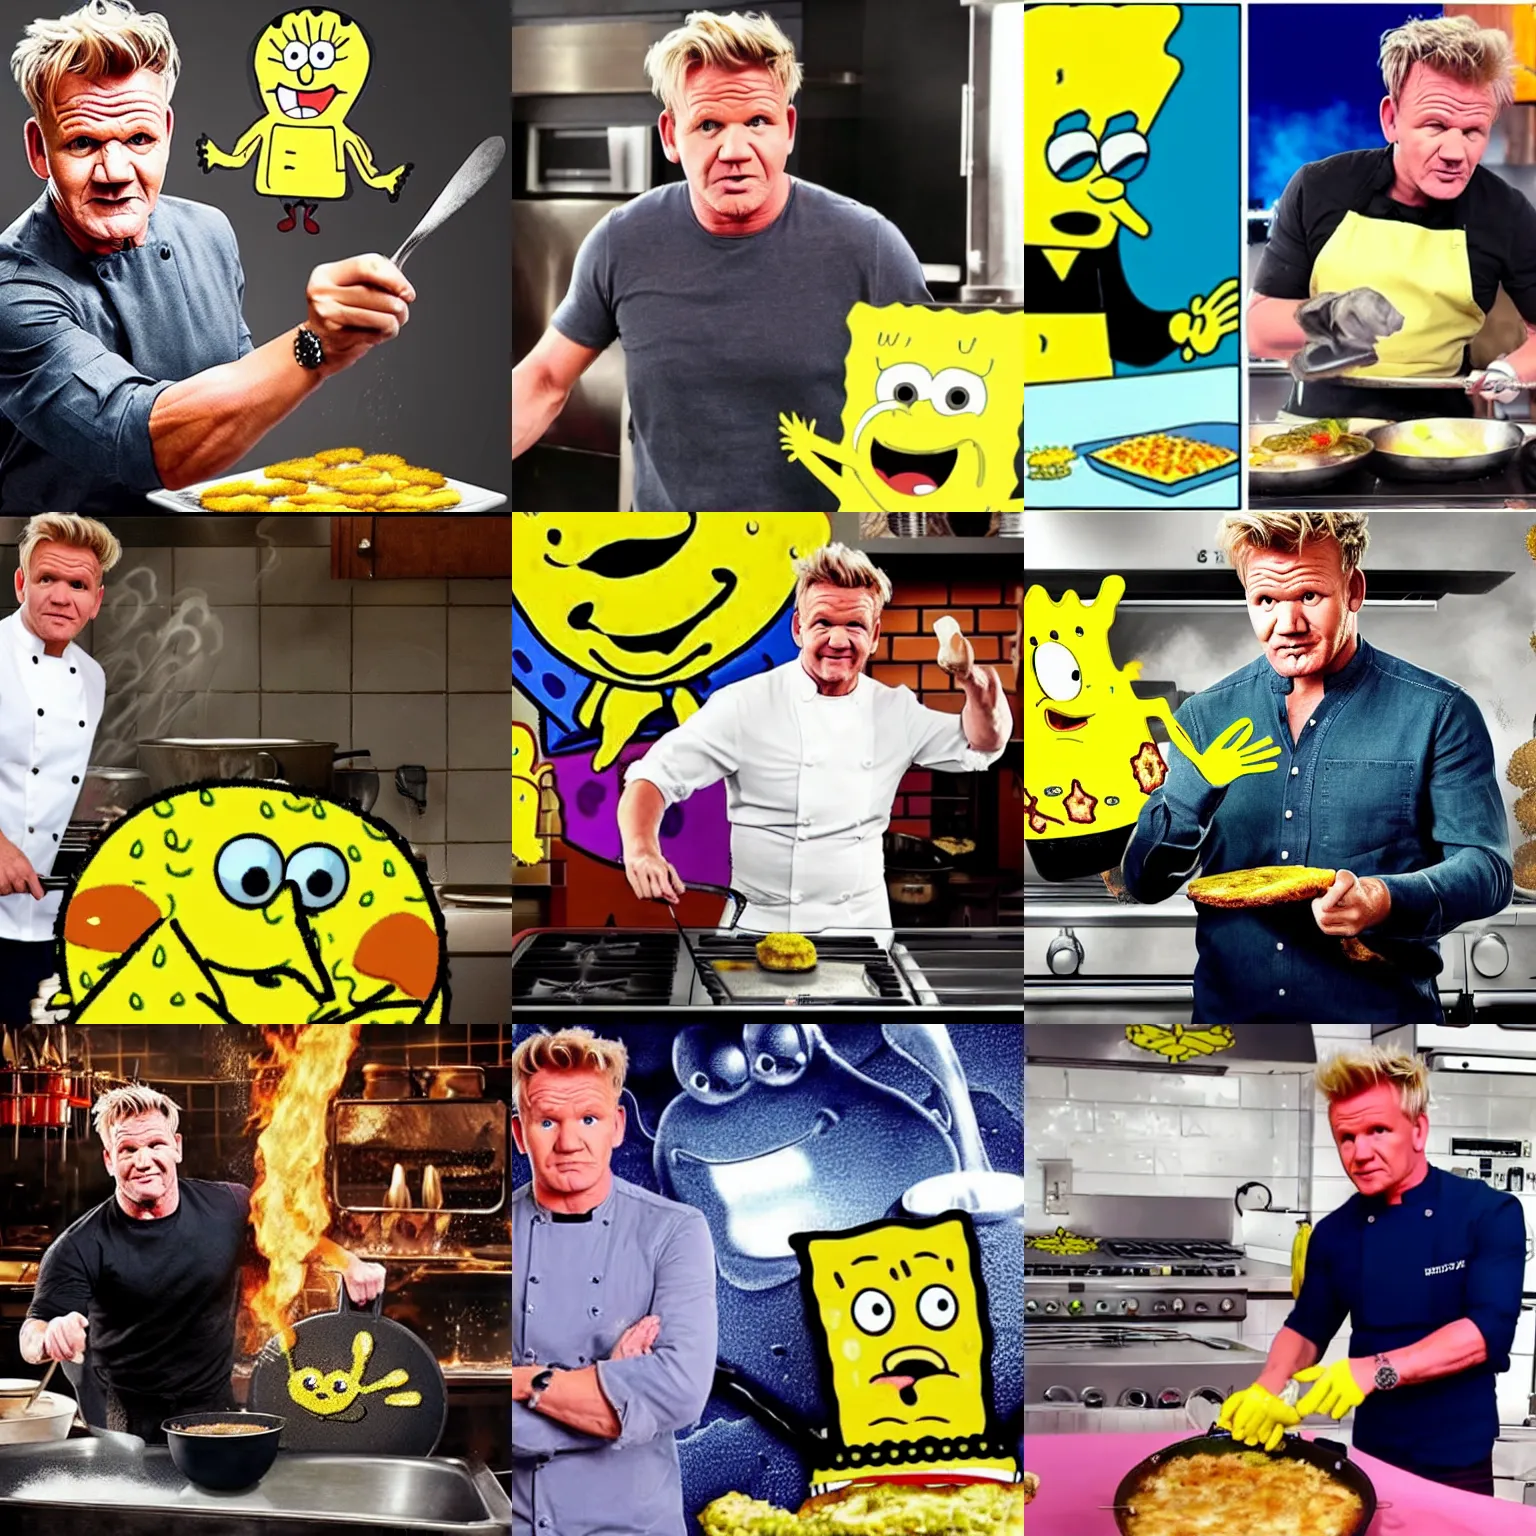 Prompt: Gordon Ramsay frying SpongeBob SquarePants on a pan, highly detailed